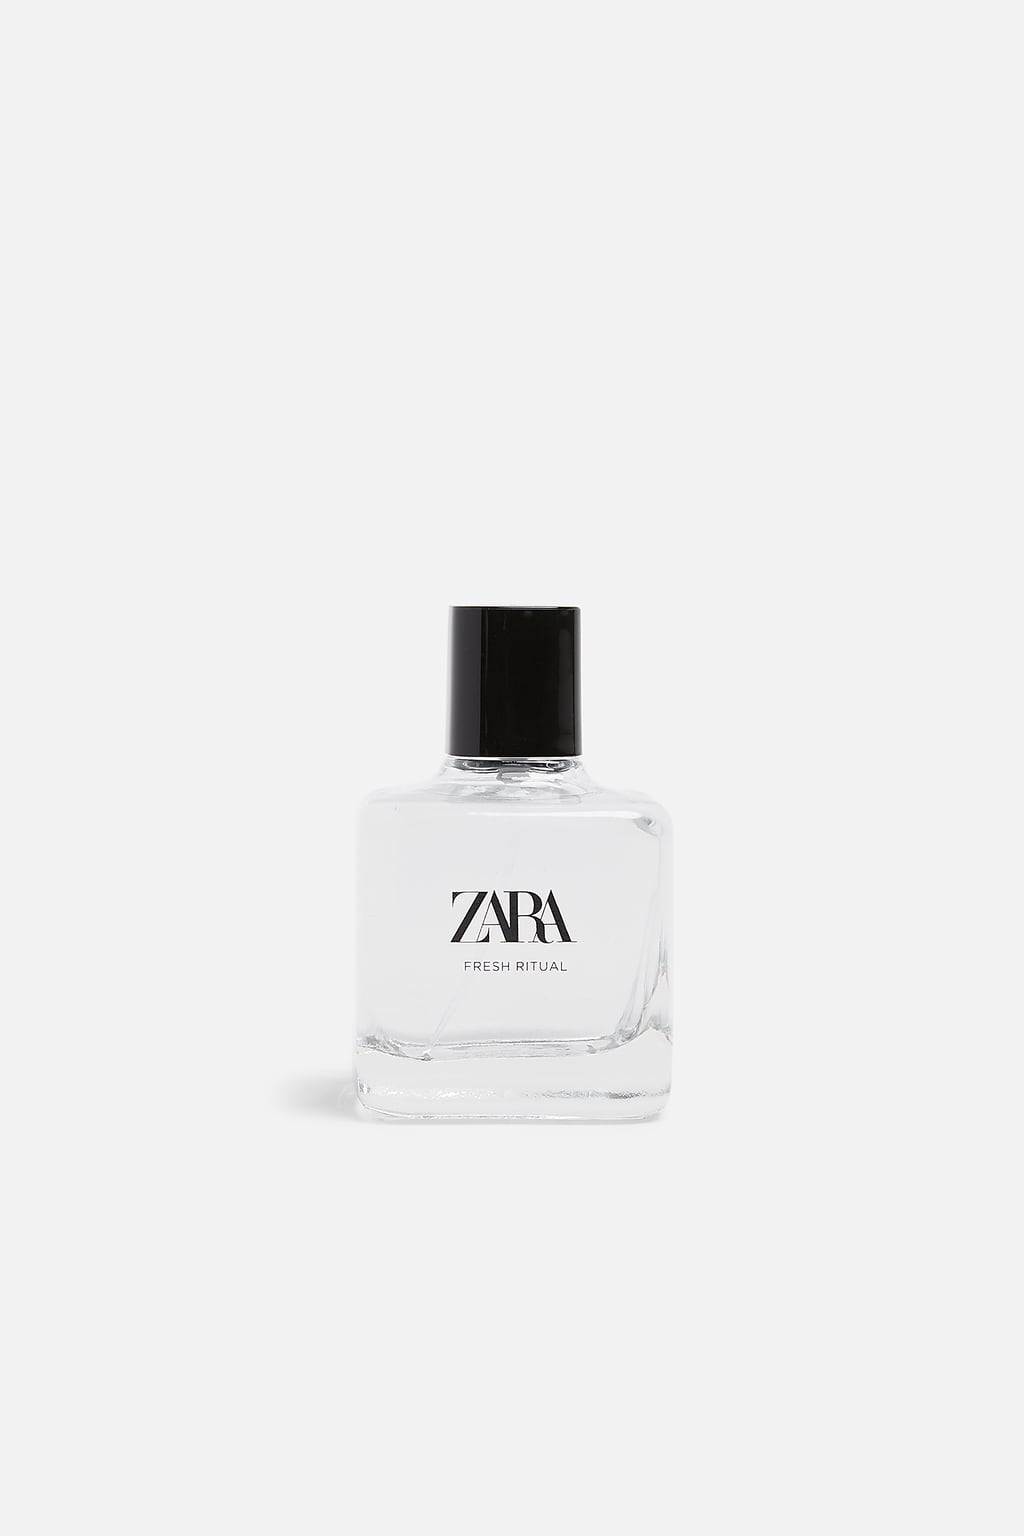 Fresh Ritual Zara perfume - a fragrance for women 2019